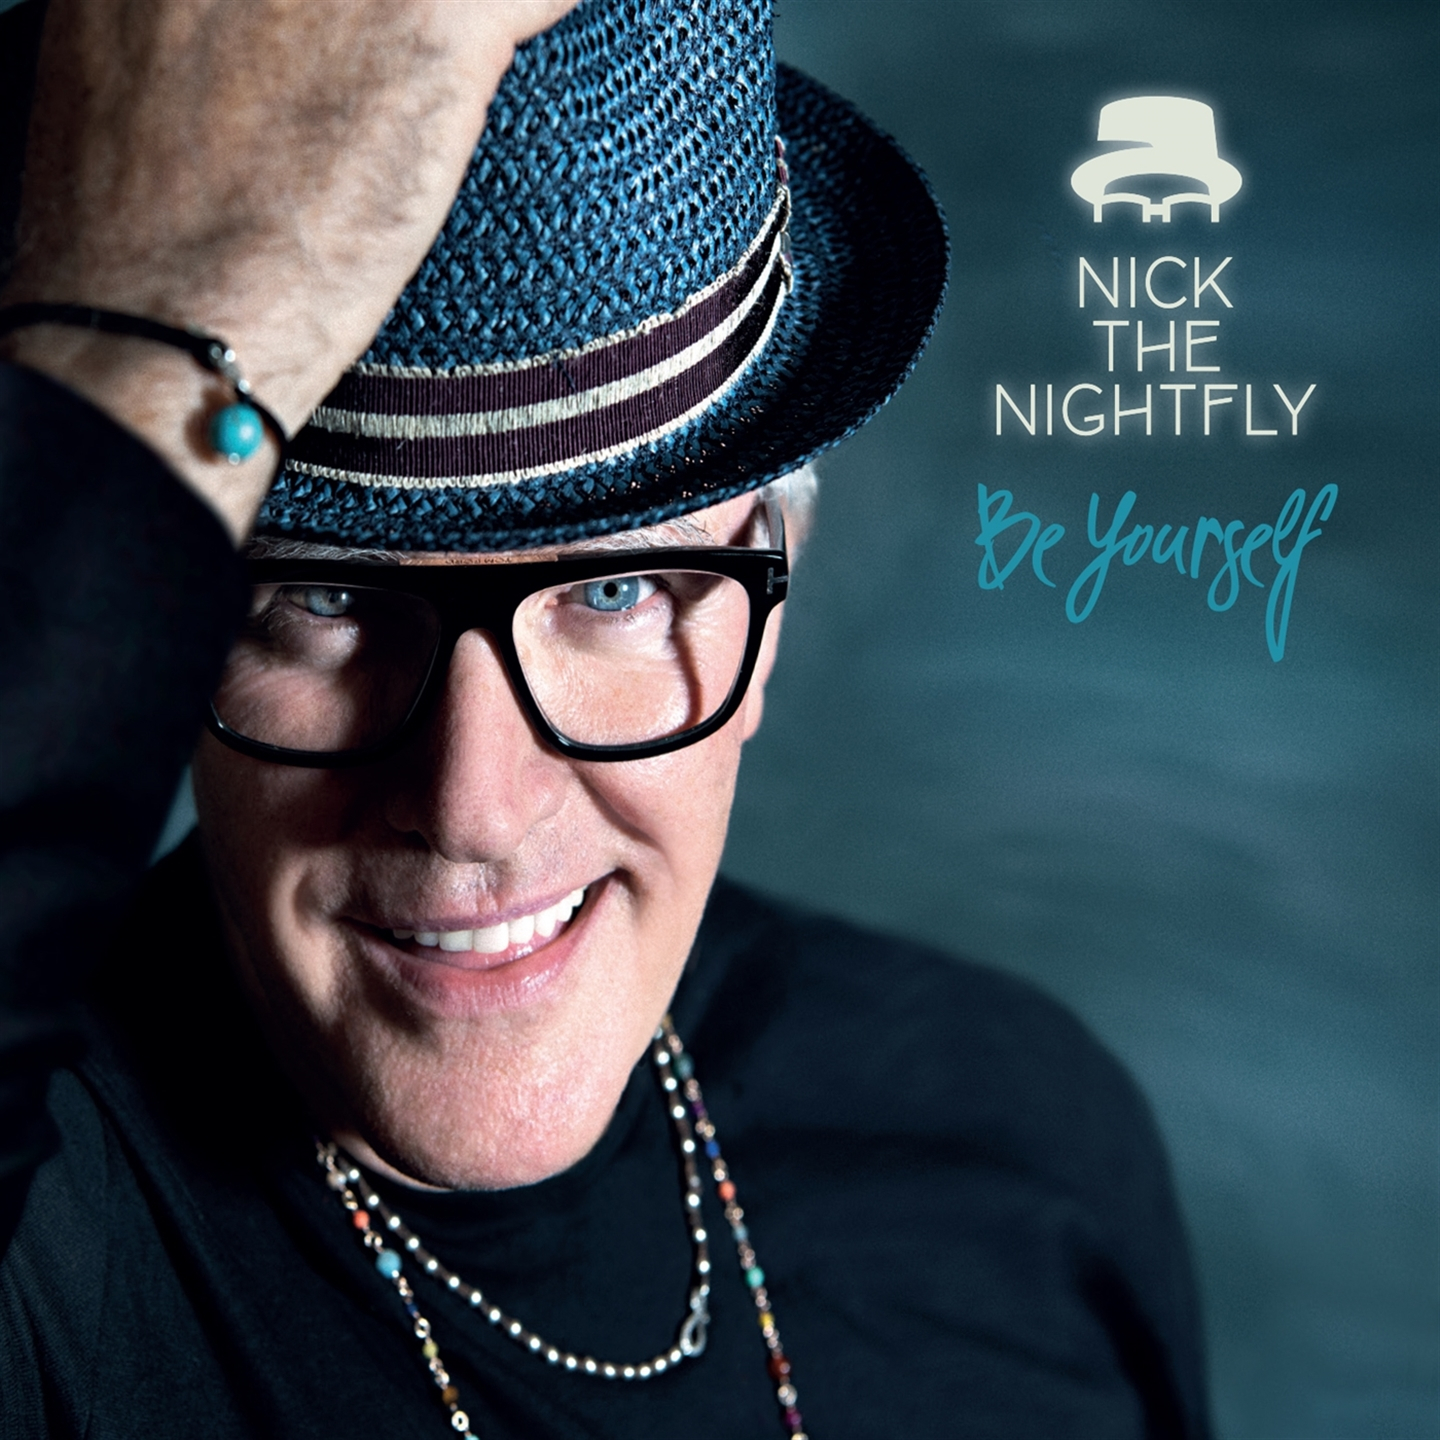 Nick The Nightfly beyourself VINYL LP NEW SEALED